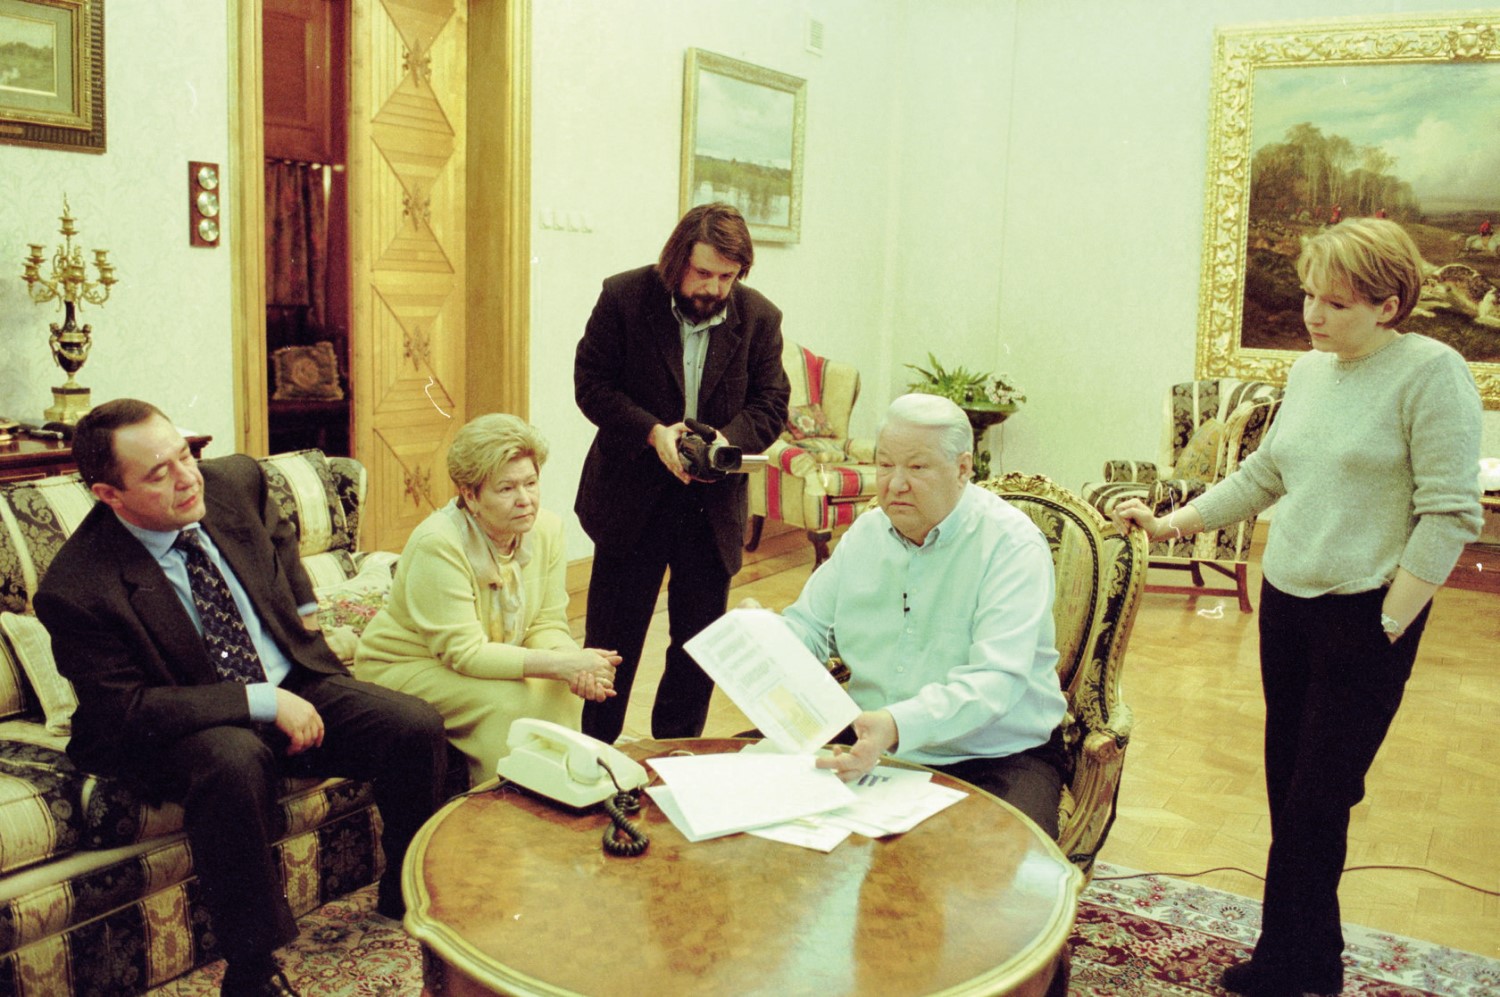 Манский снимает экс-президента Ельцина. Кадр из фильма «Свидетель Путина» 